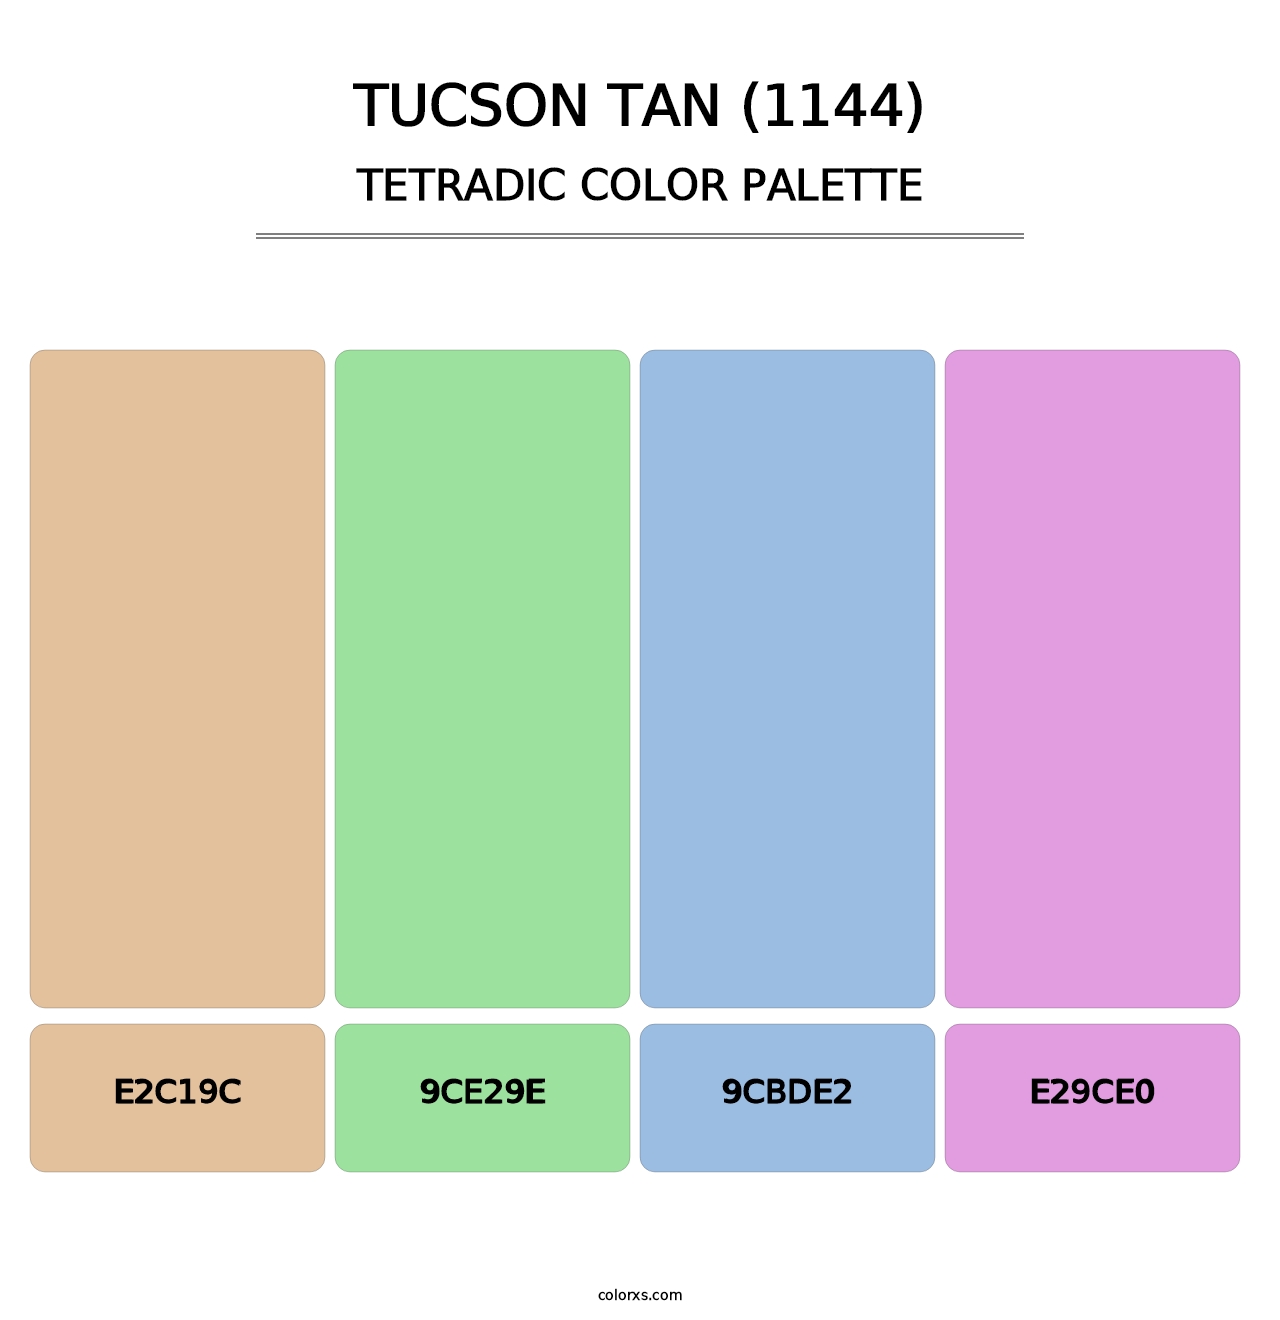 Tucson Tan (1144) - Tetradic Color Palette